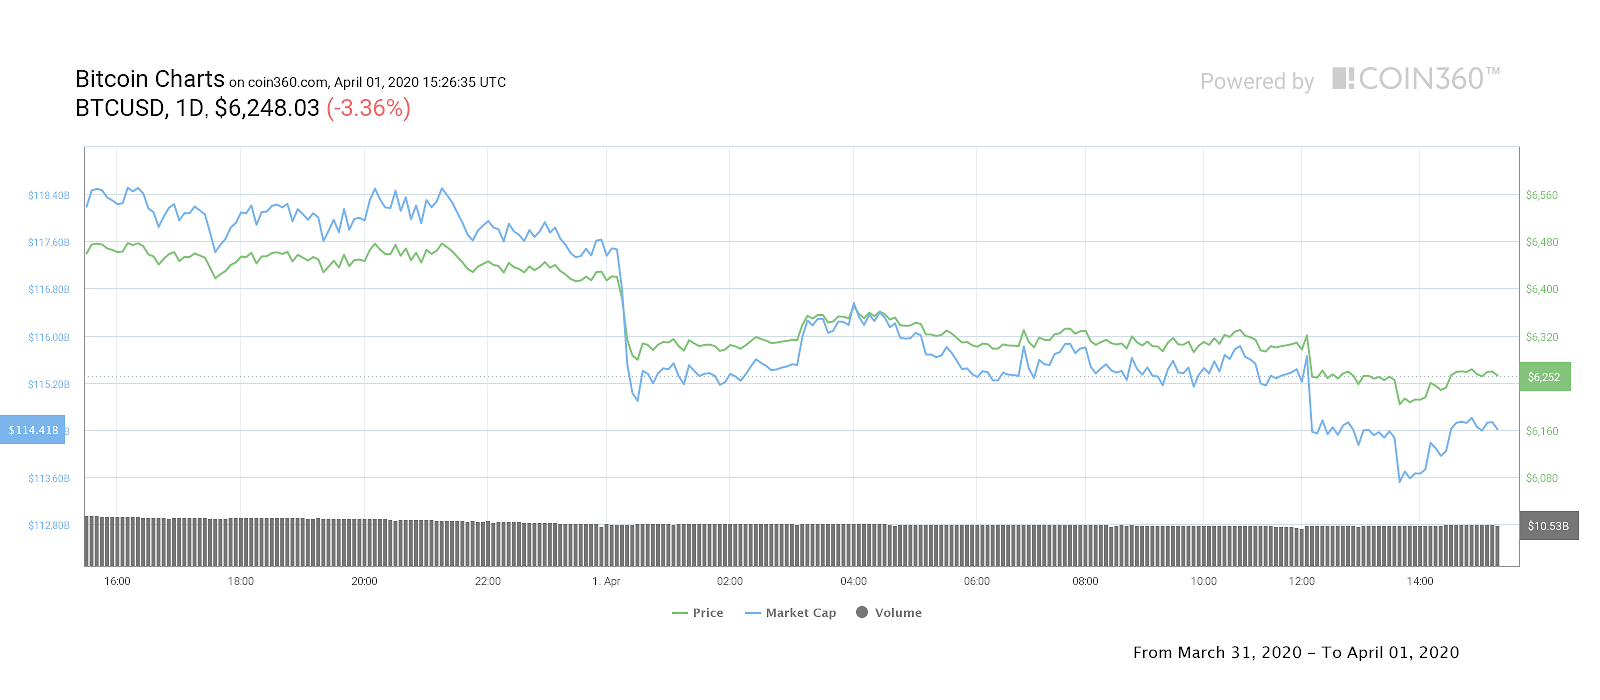 Grafik harga 1 hari Bitcoin